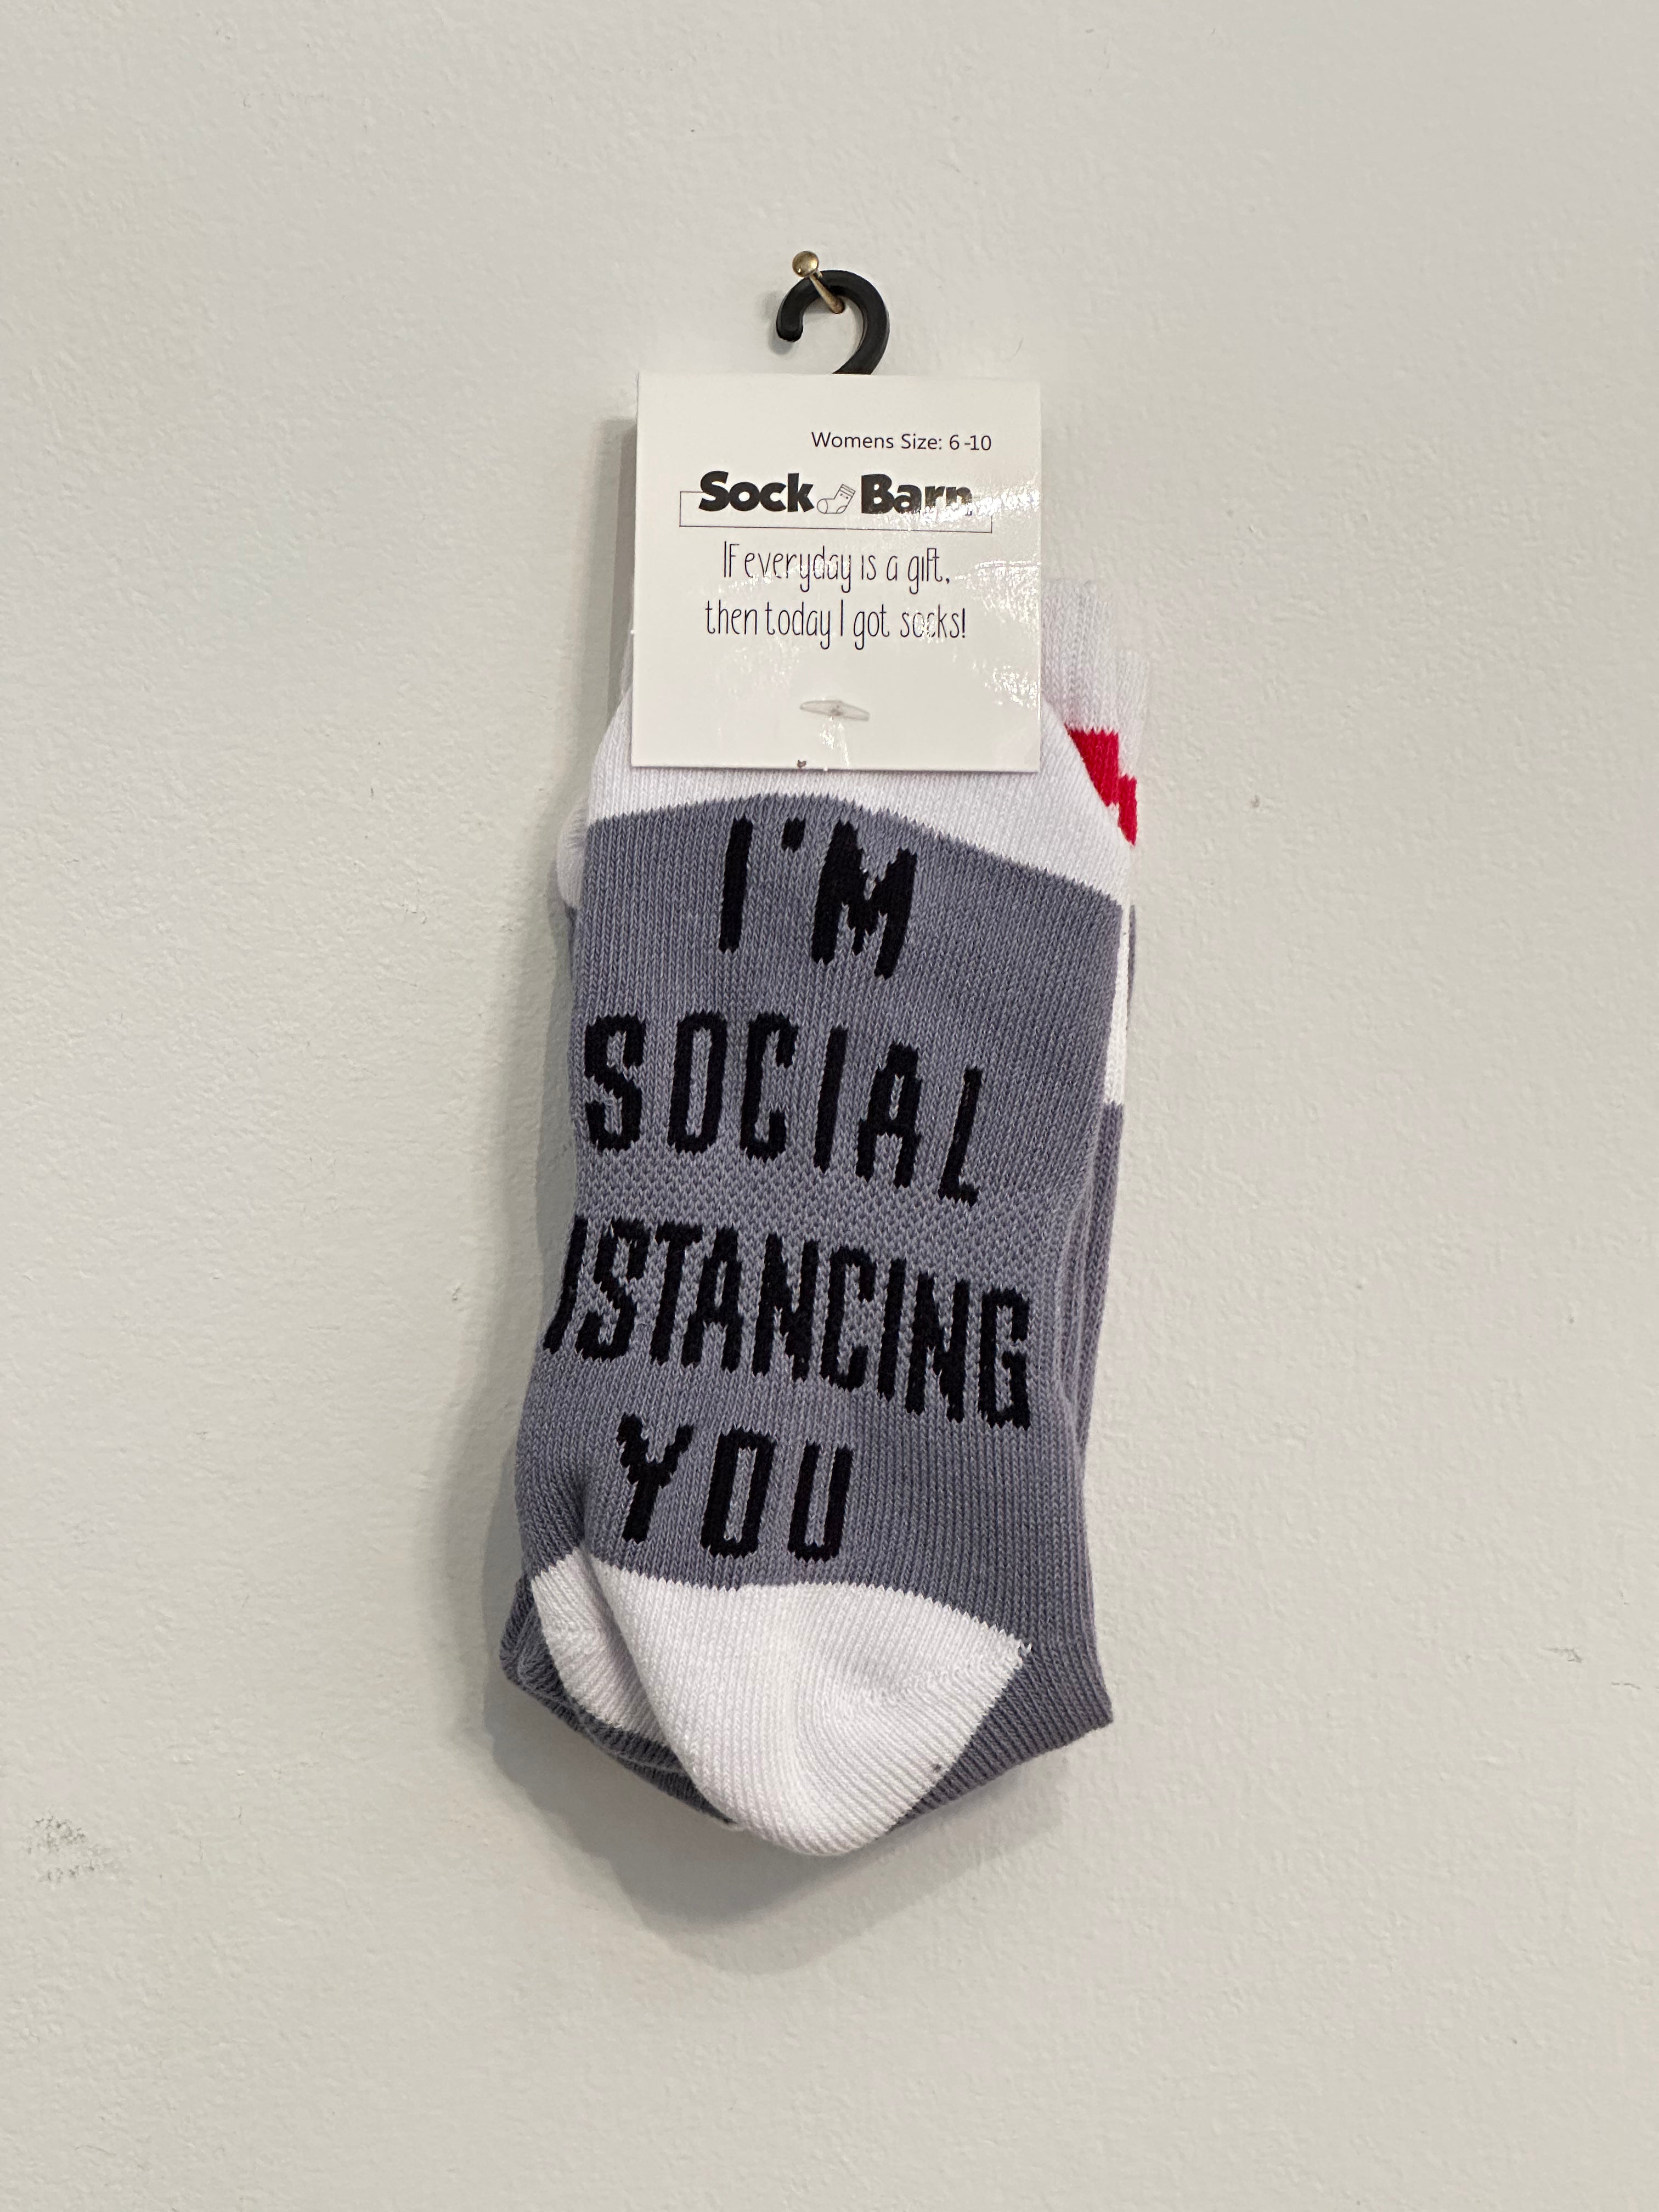 I'm Social Distancing You - Funny Socks | The Sock Barn